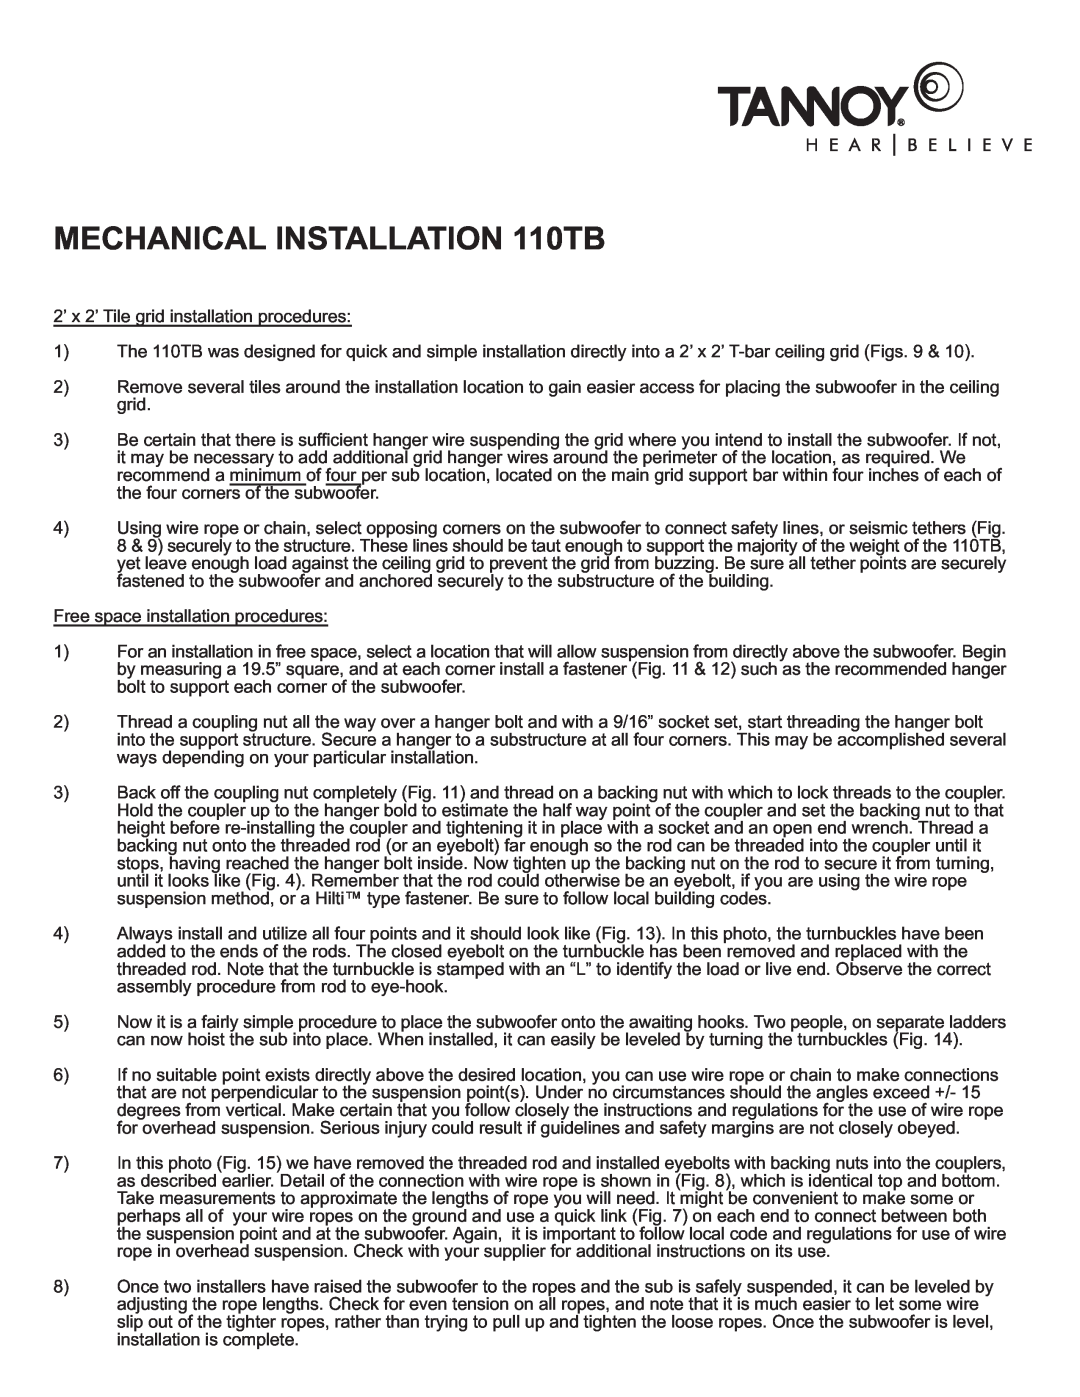 TOA Electronics 110SR owner manual MECHANICAL INSTALLATION 110TB, 2’ x 2’ Tile grid installation procedures 